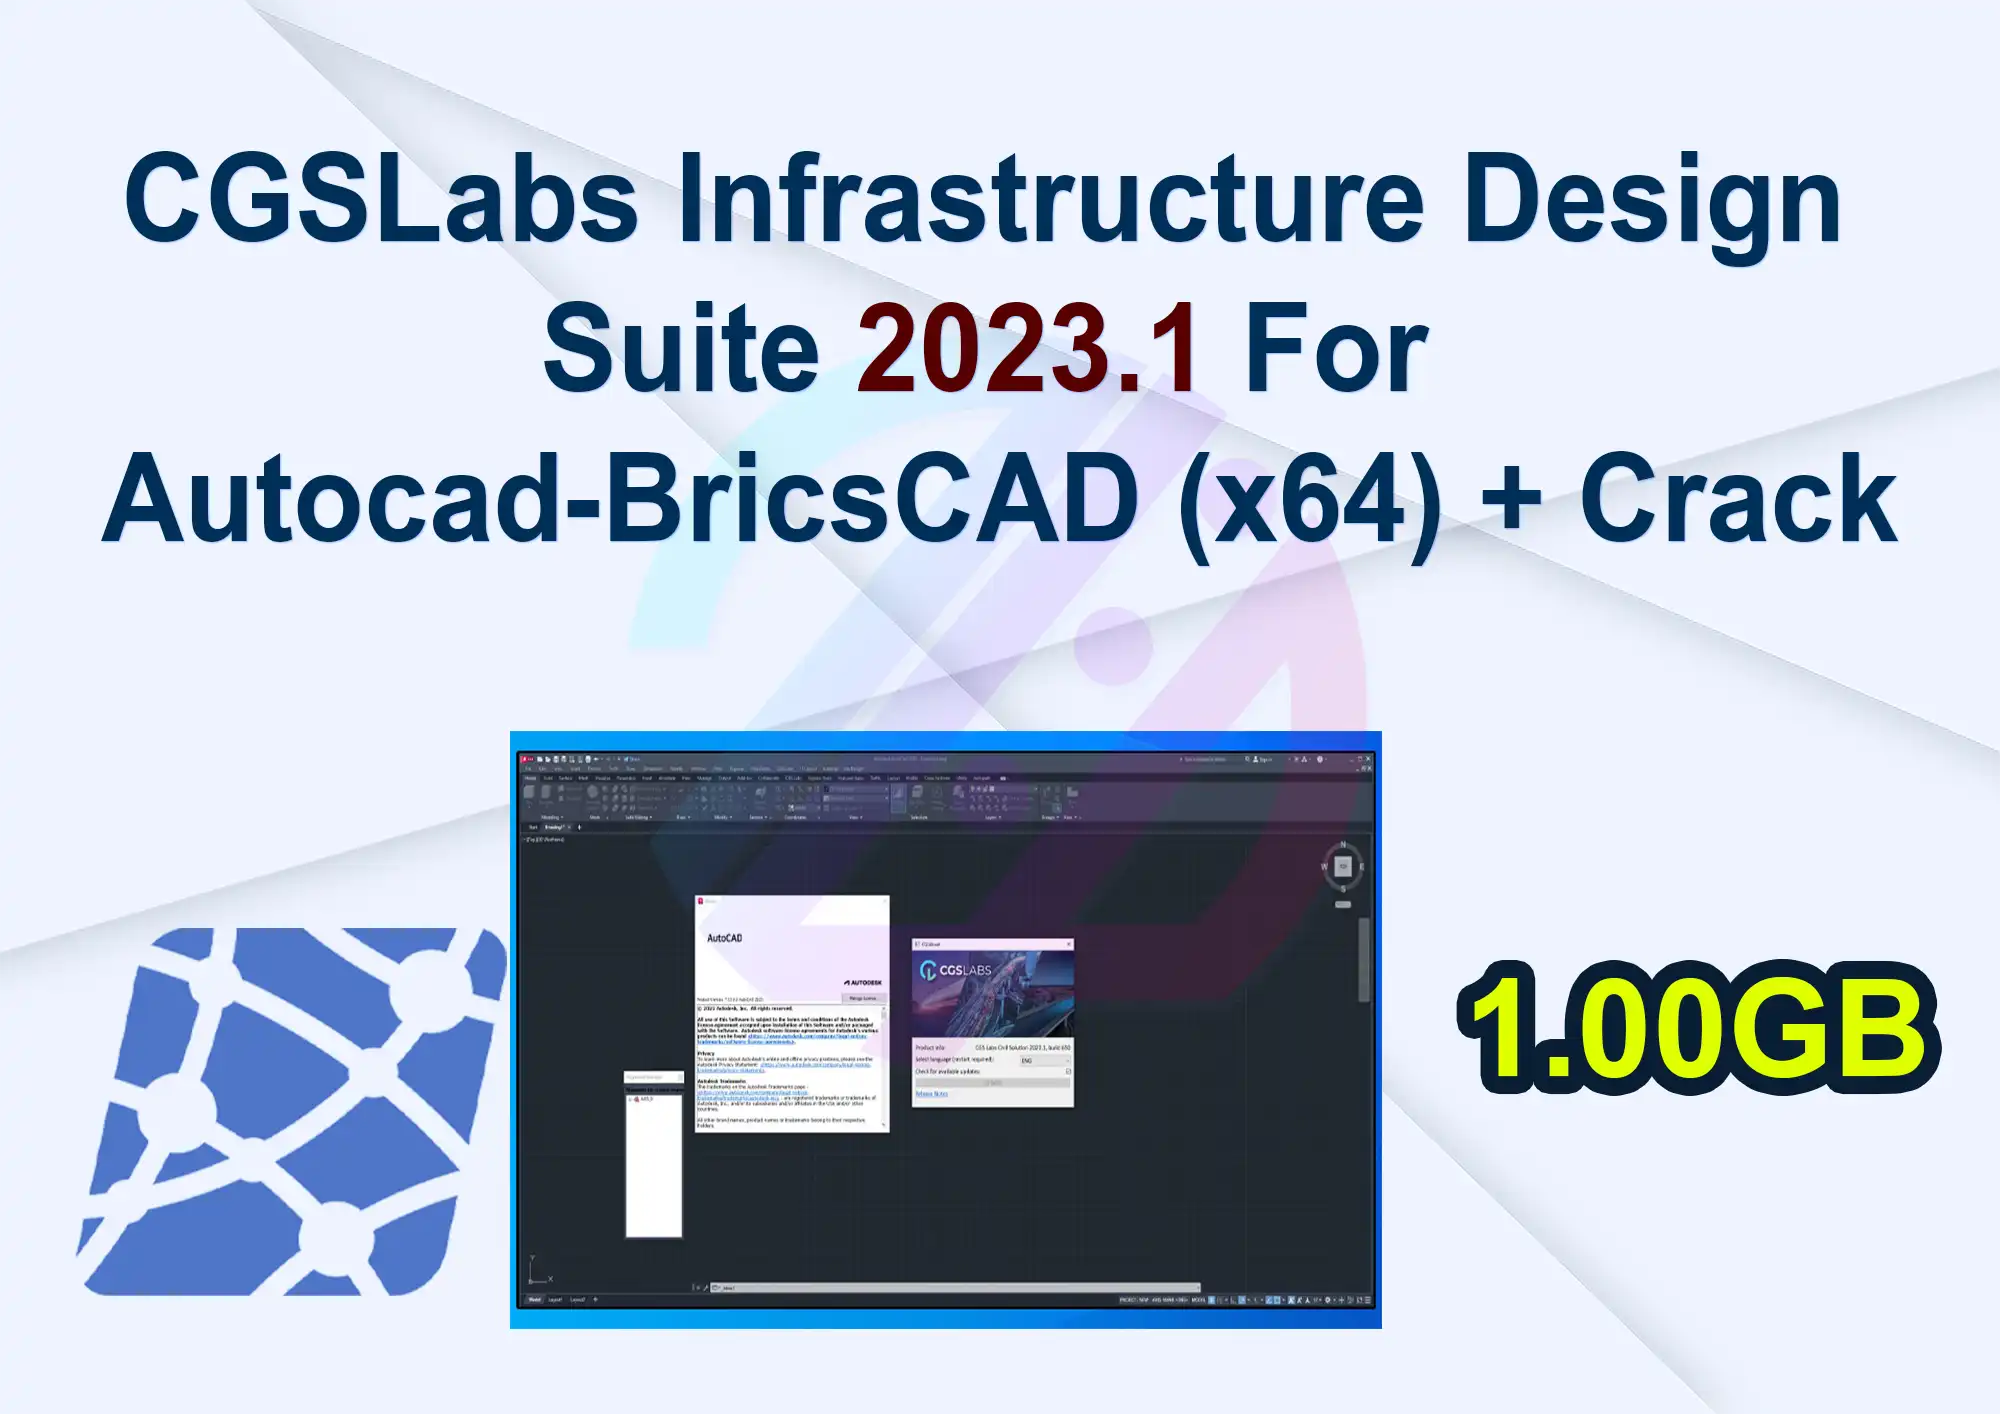 CGSLabs Infrastructure Design Suite 2023.1 For Autocad-BricsCAD (x64) + Crack